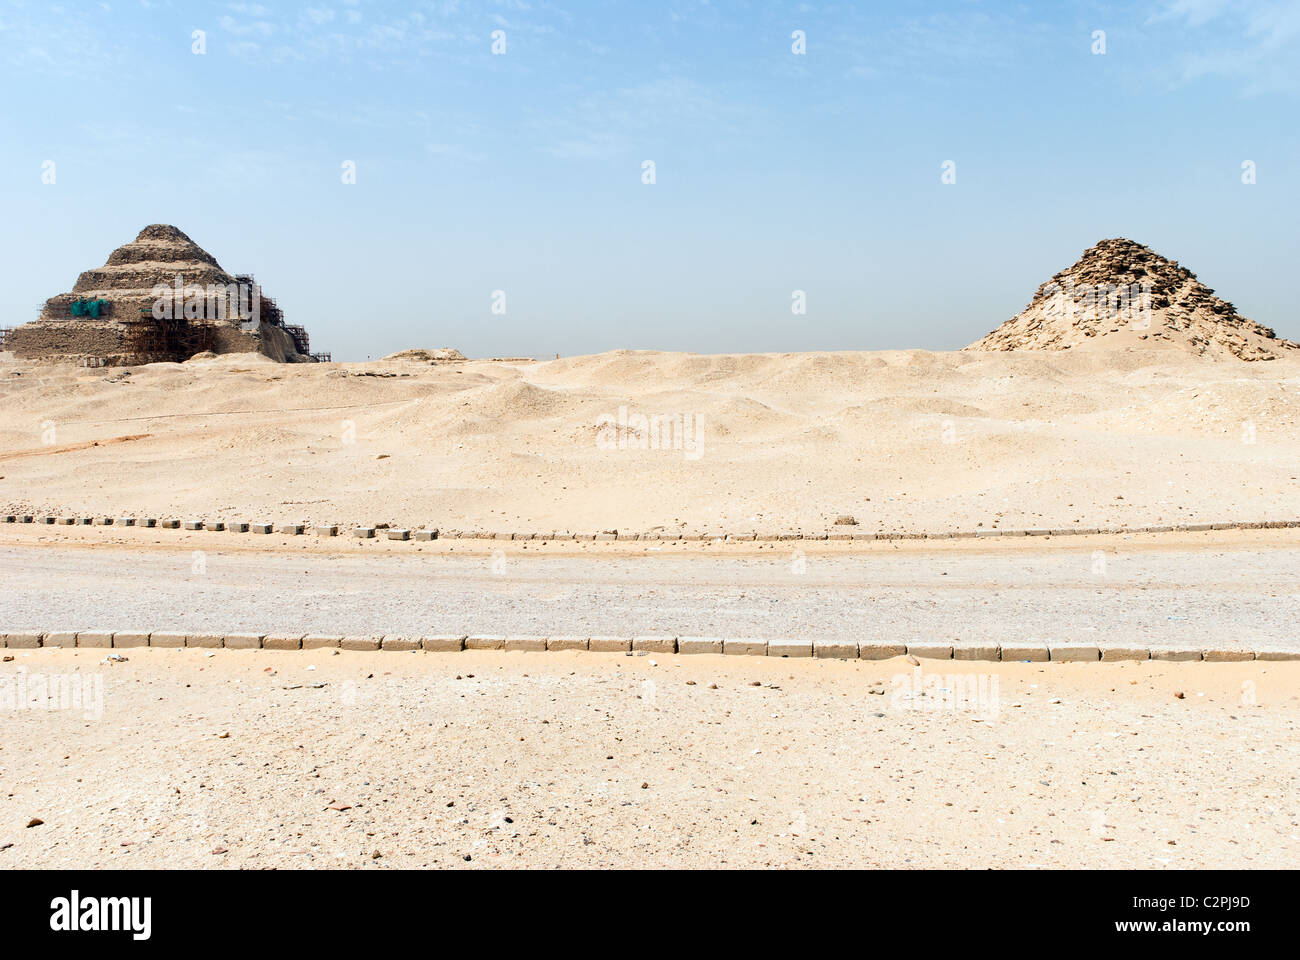 Pyramid of Djoser and Pyramid of Userkaf - Saqqara necropolis, Lower Egypt Stock Photo